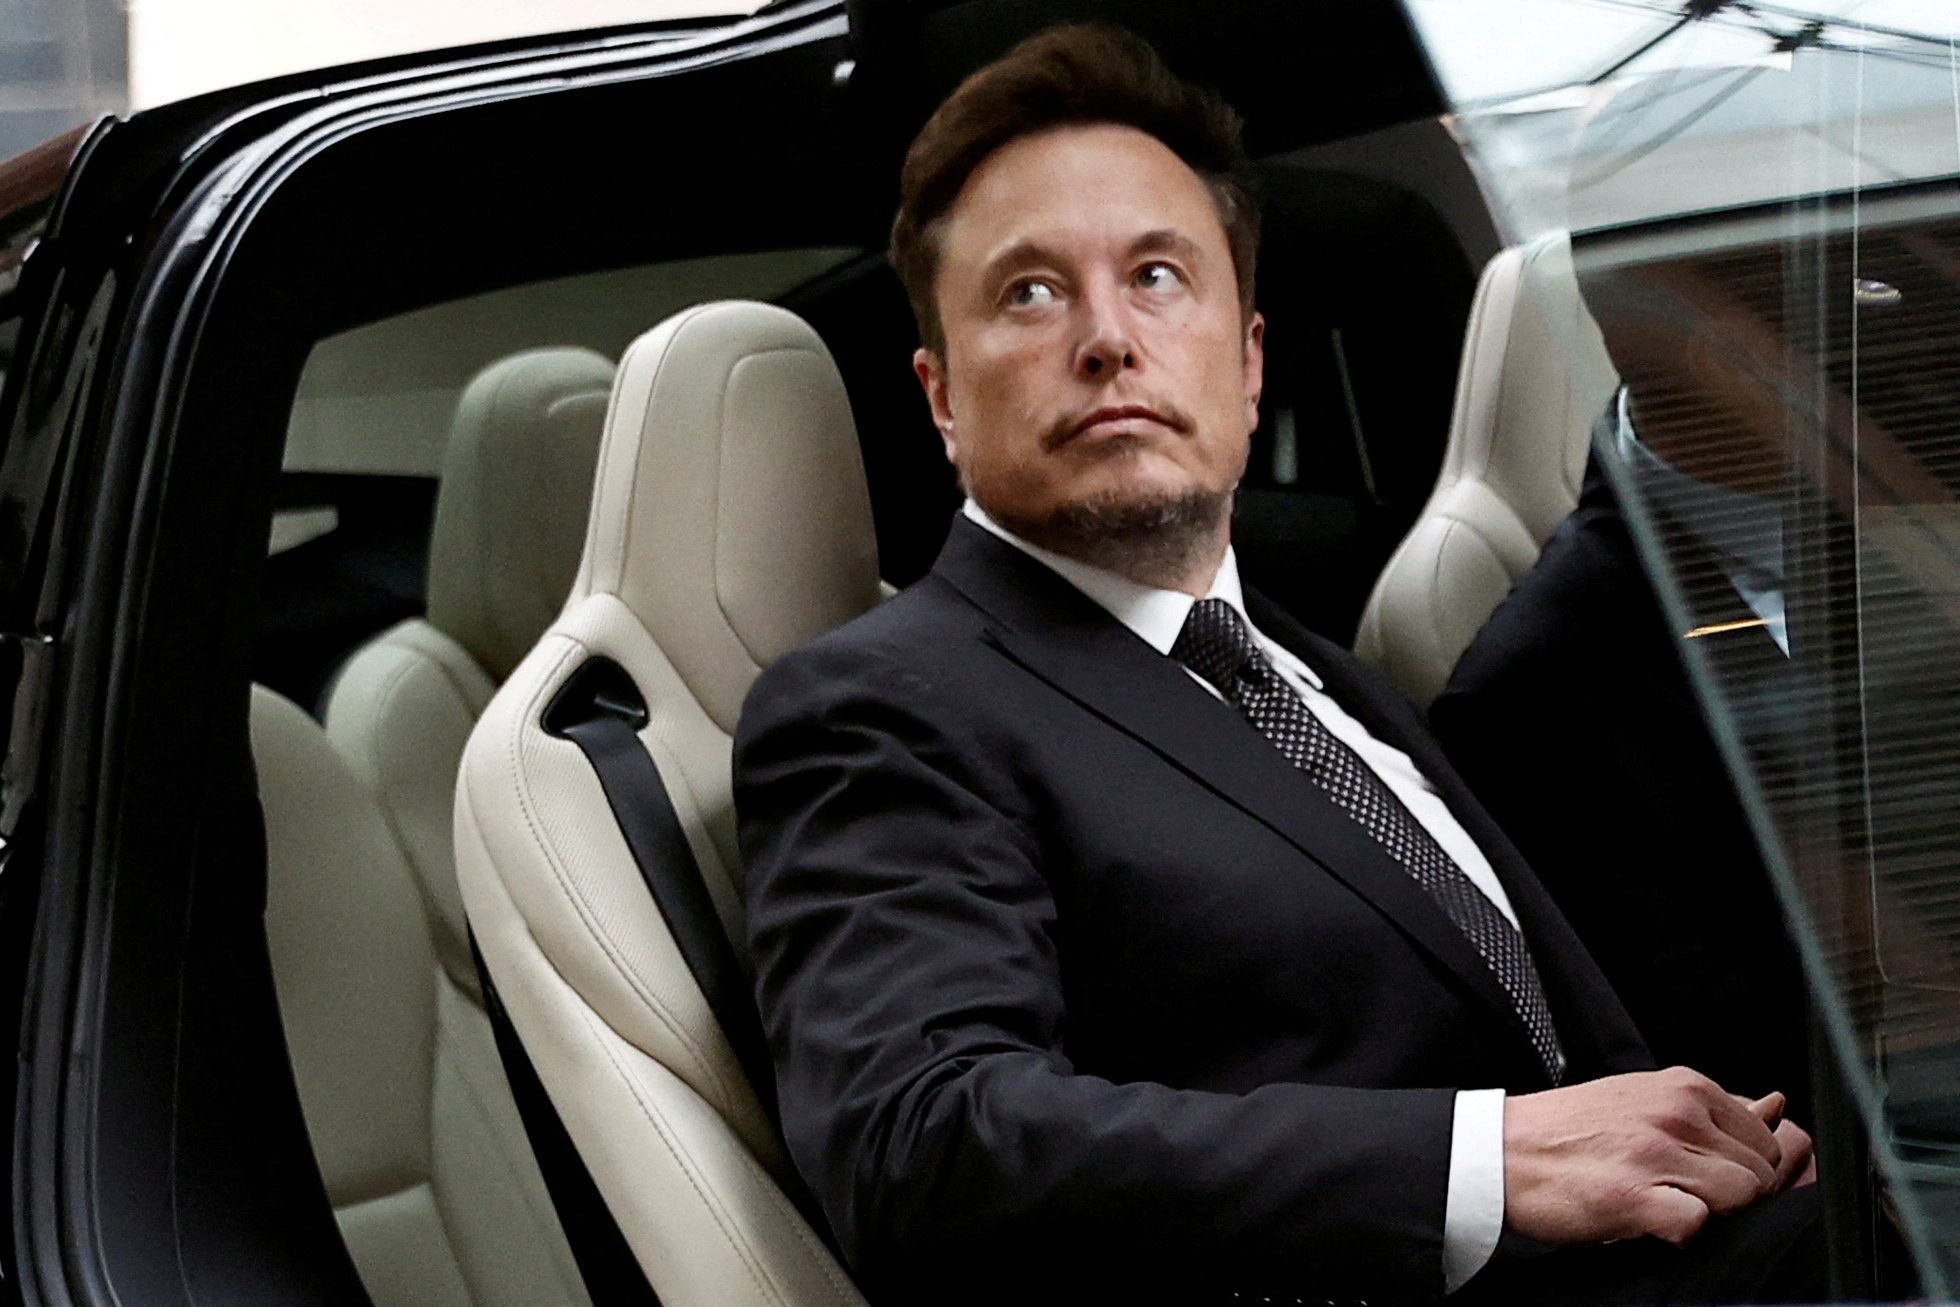 Elon Musk gets in a Tesla car as he leaves a hotel in Beijing, May 31, 2023. REUTERS/Tingshu Wang